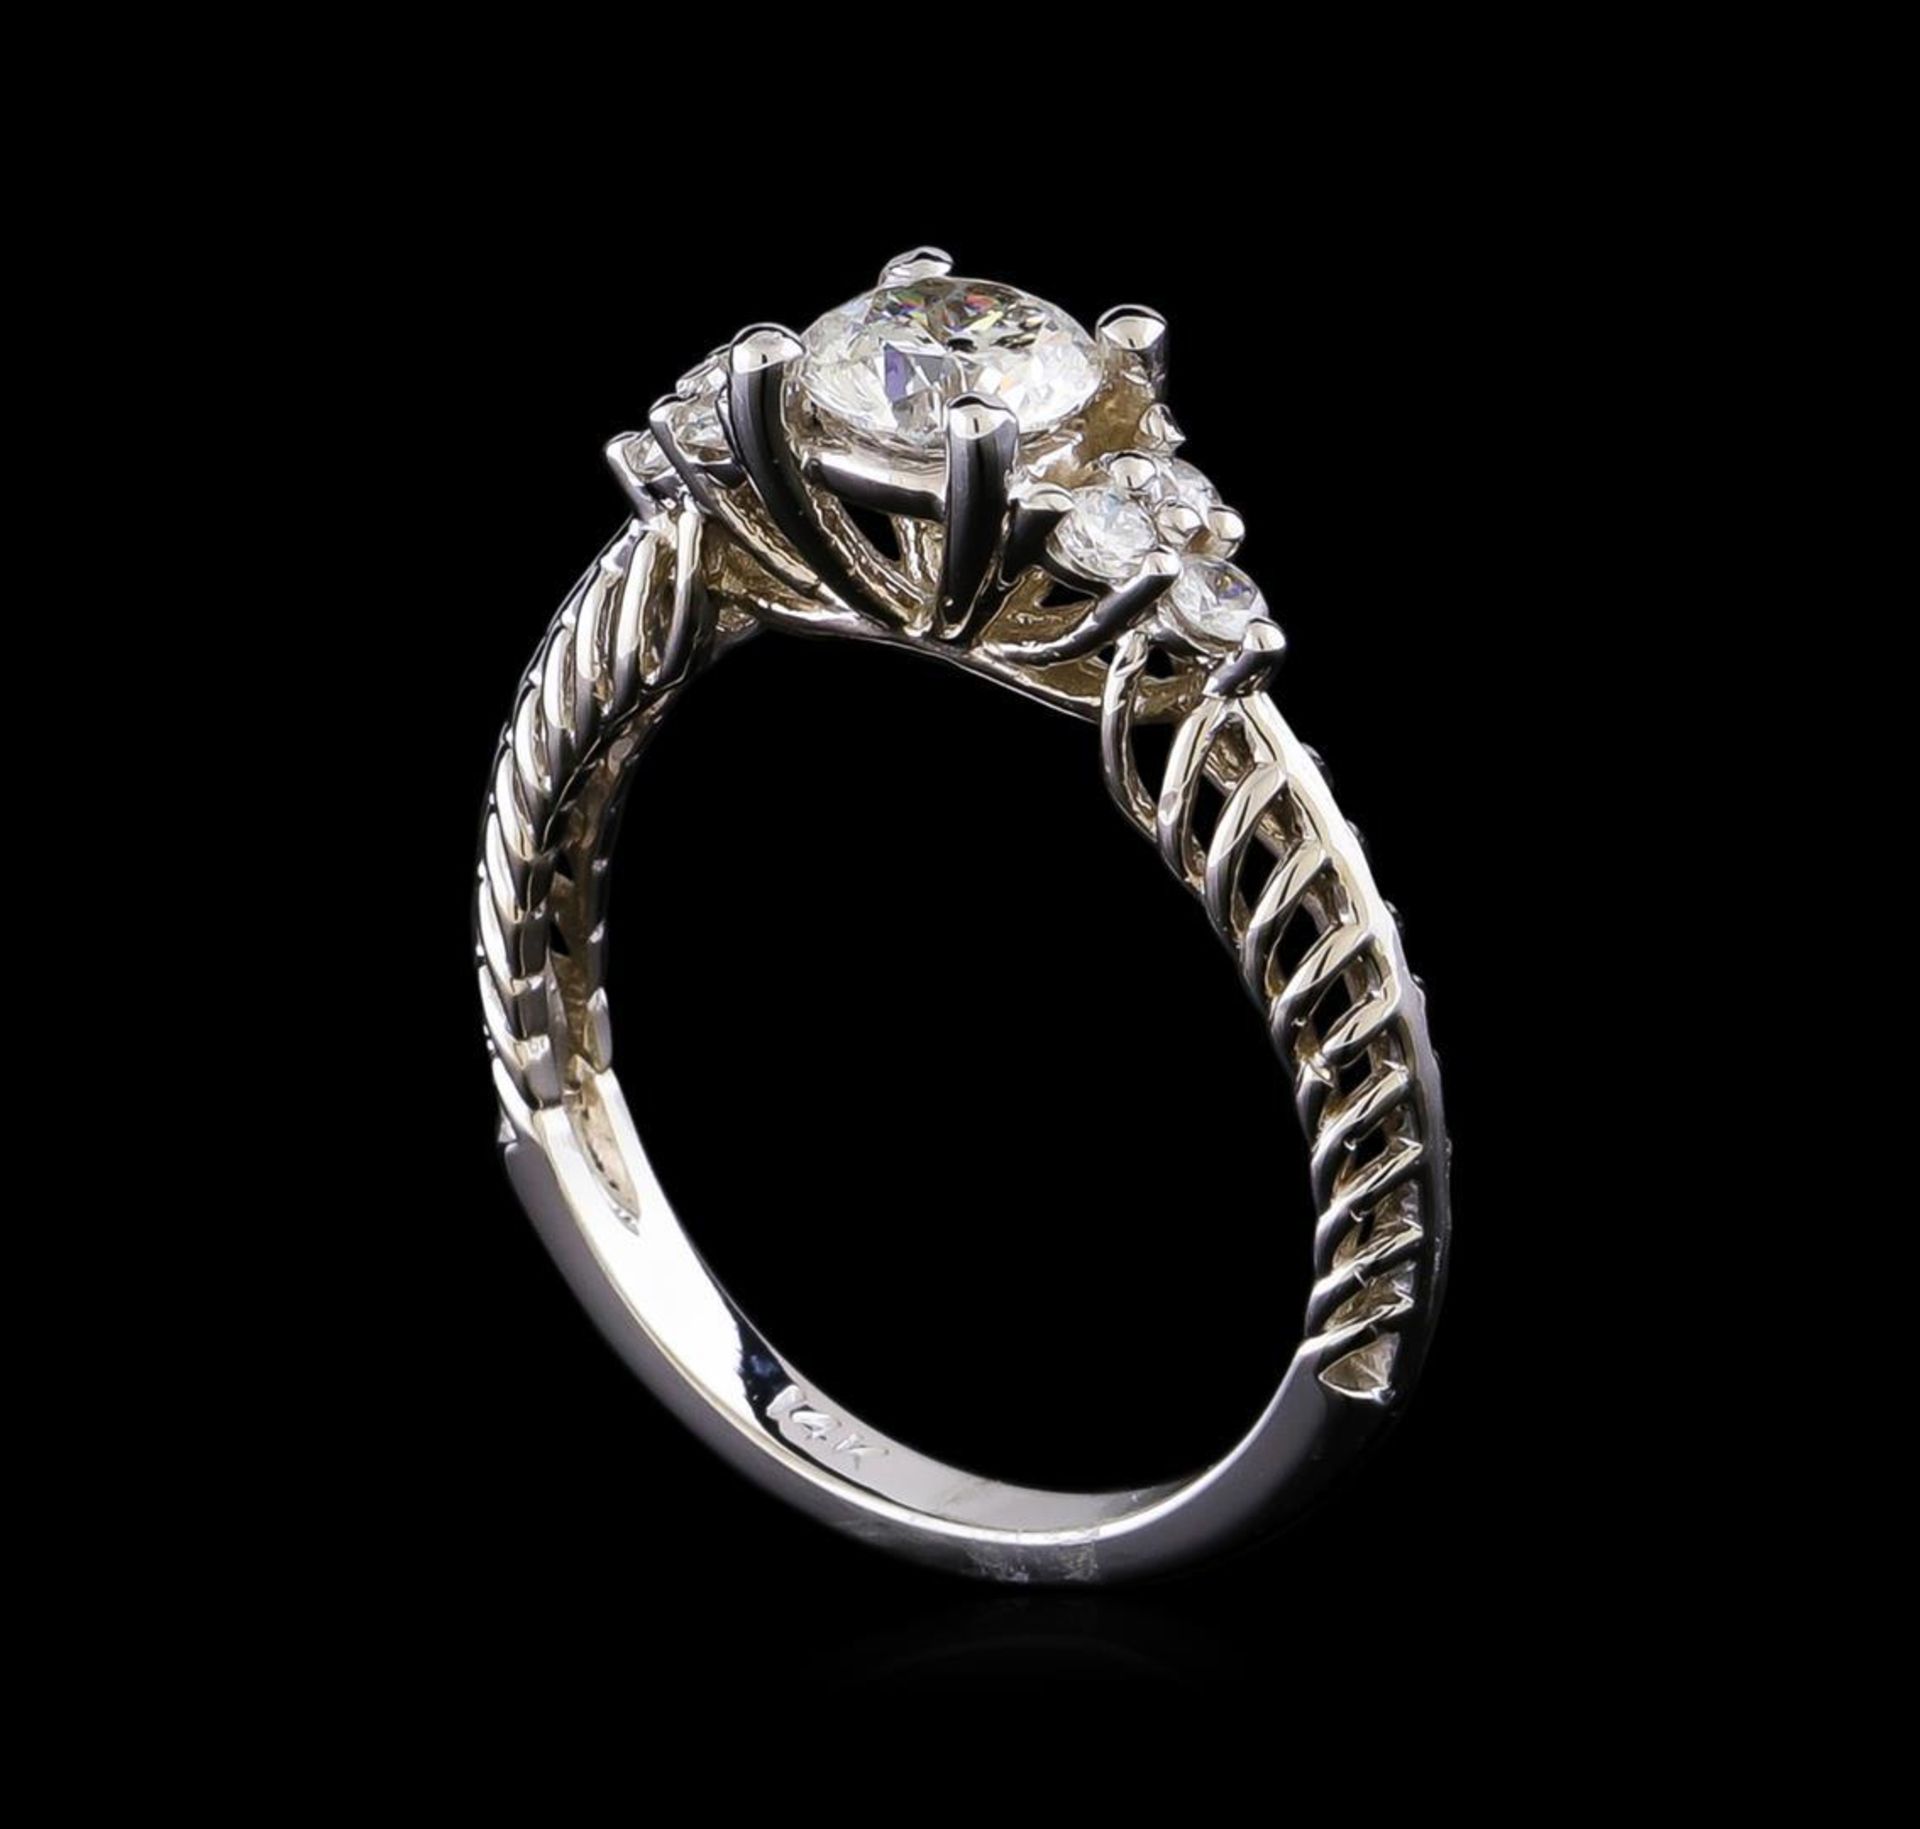 0.90 ctw Diamond Ring - 14KT White Gold - Image 4 of 5